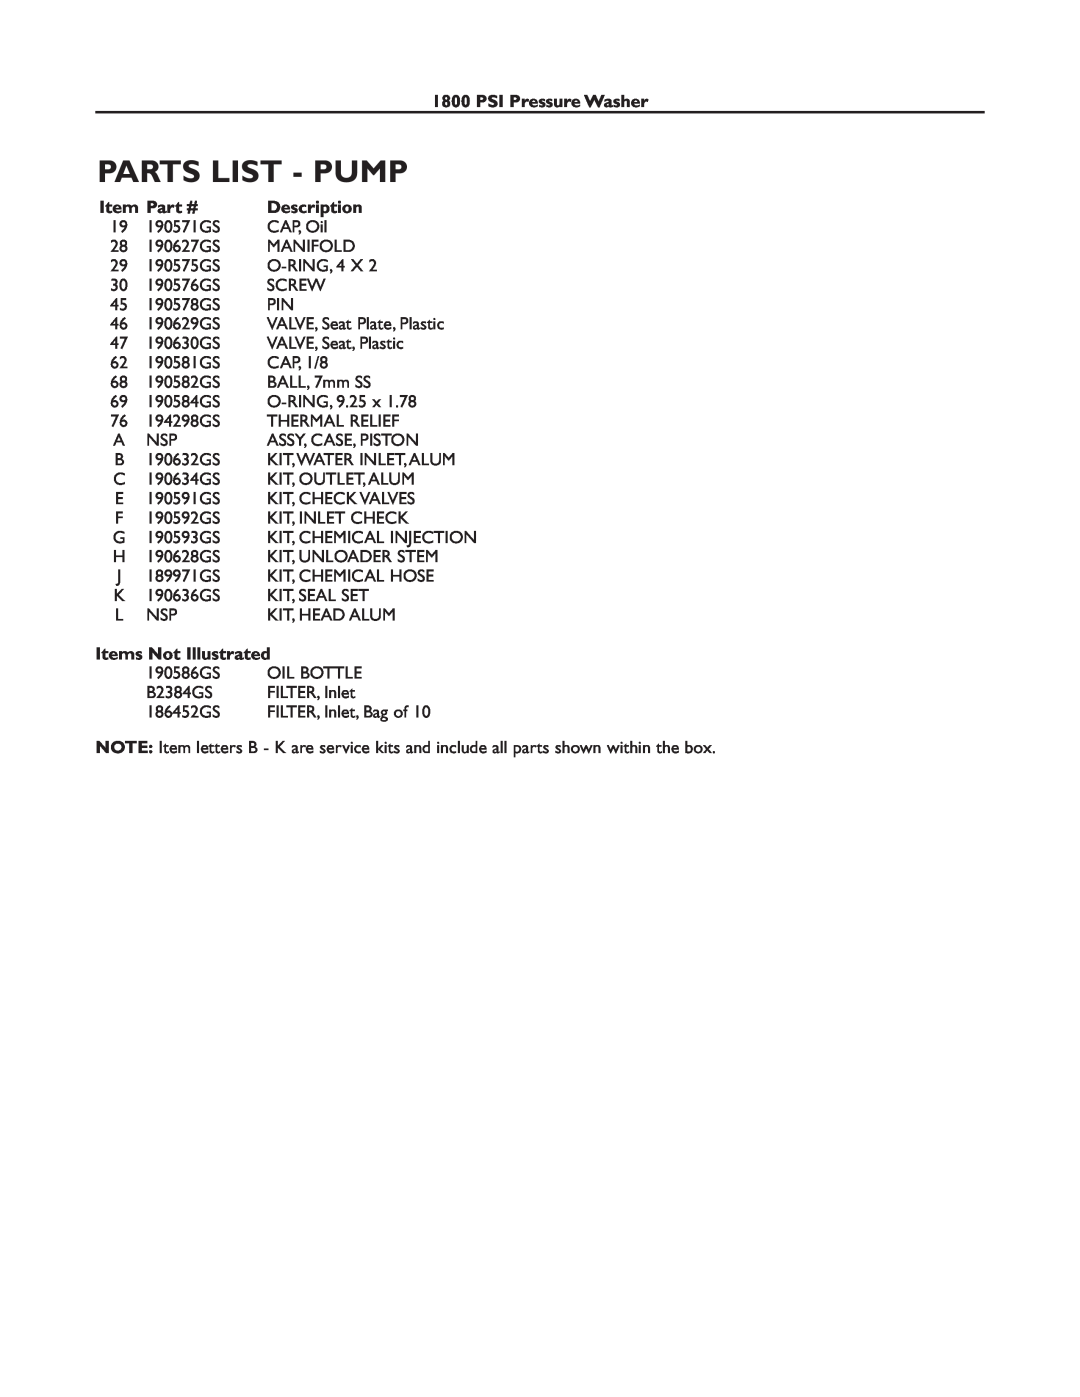 Briggs & Stratton 01811-0 manual Parts List - Pump, Items Not Illustrated, PSI Pressure Washer, Description 